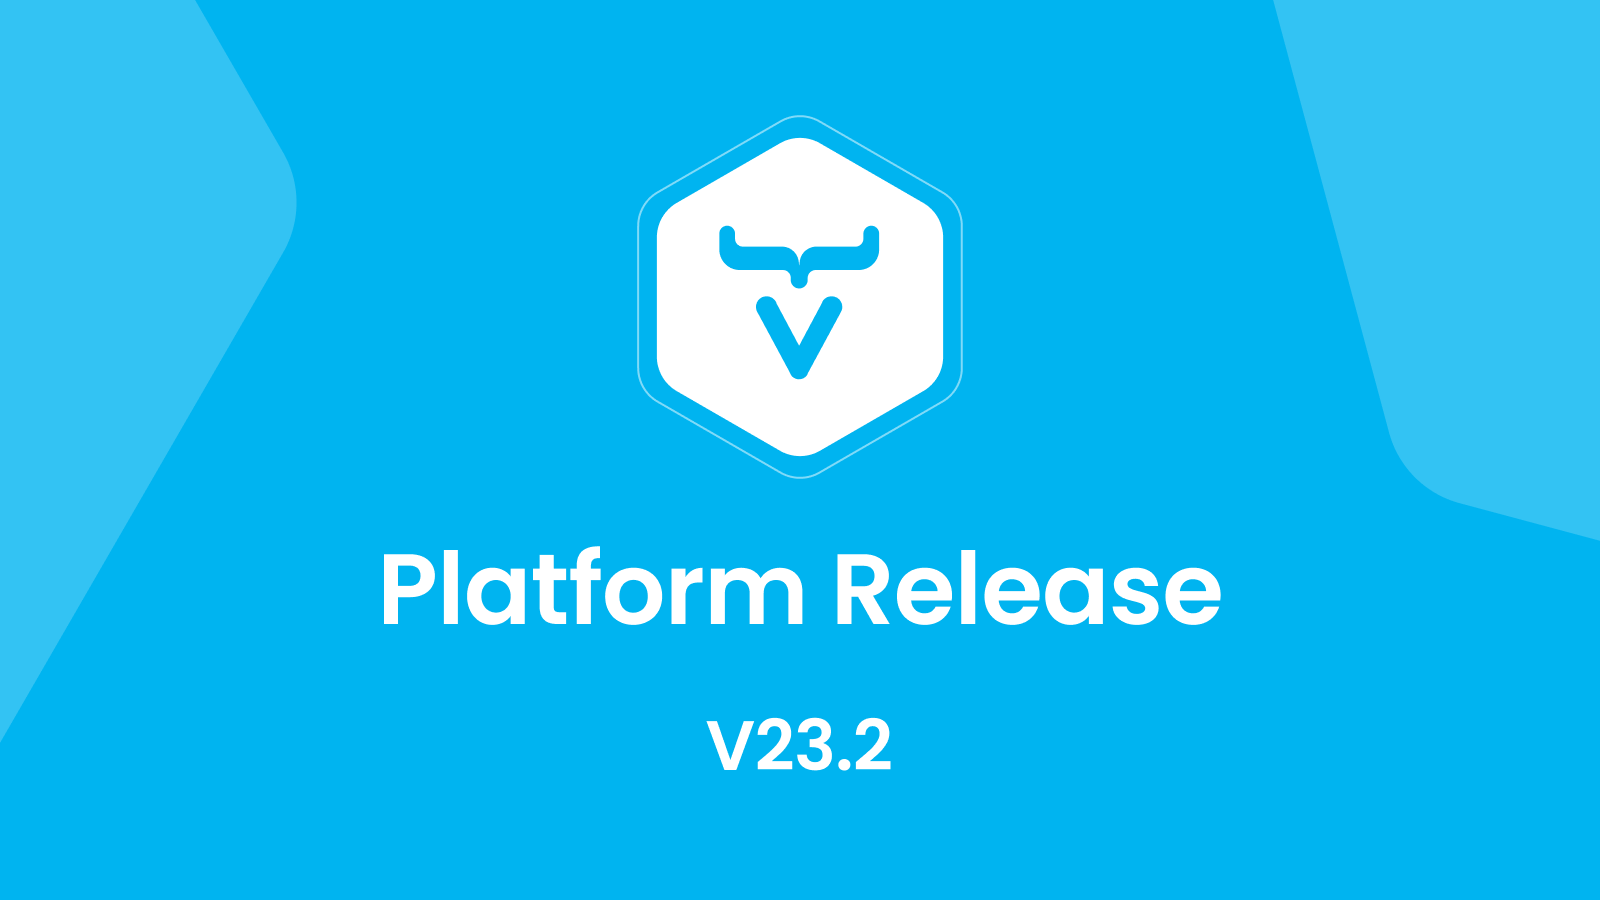 Vaadin logo on a blue background with text "Platform Release V32.2"